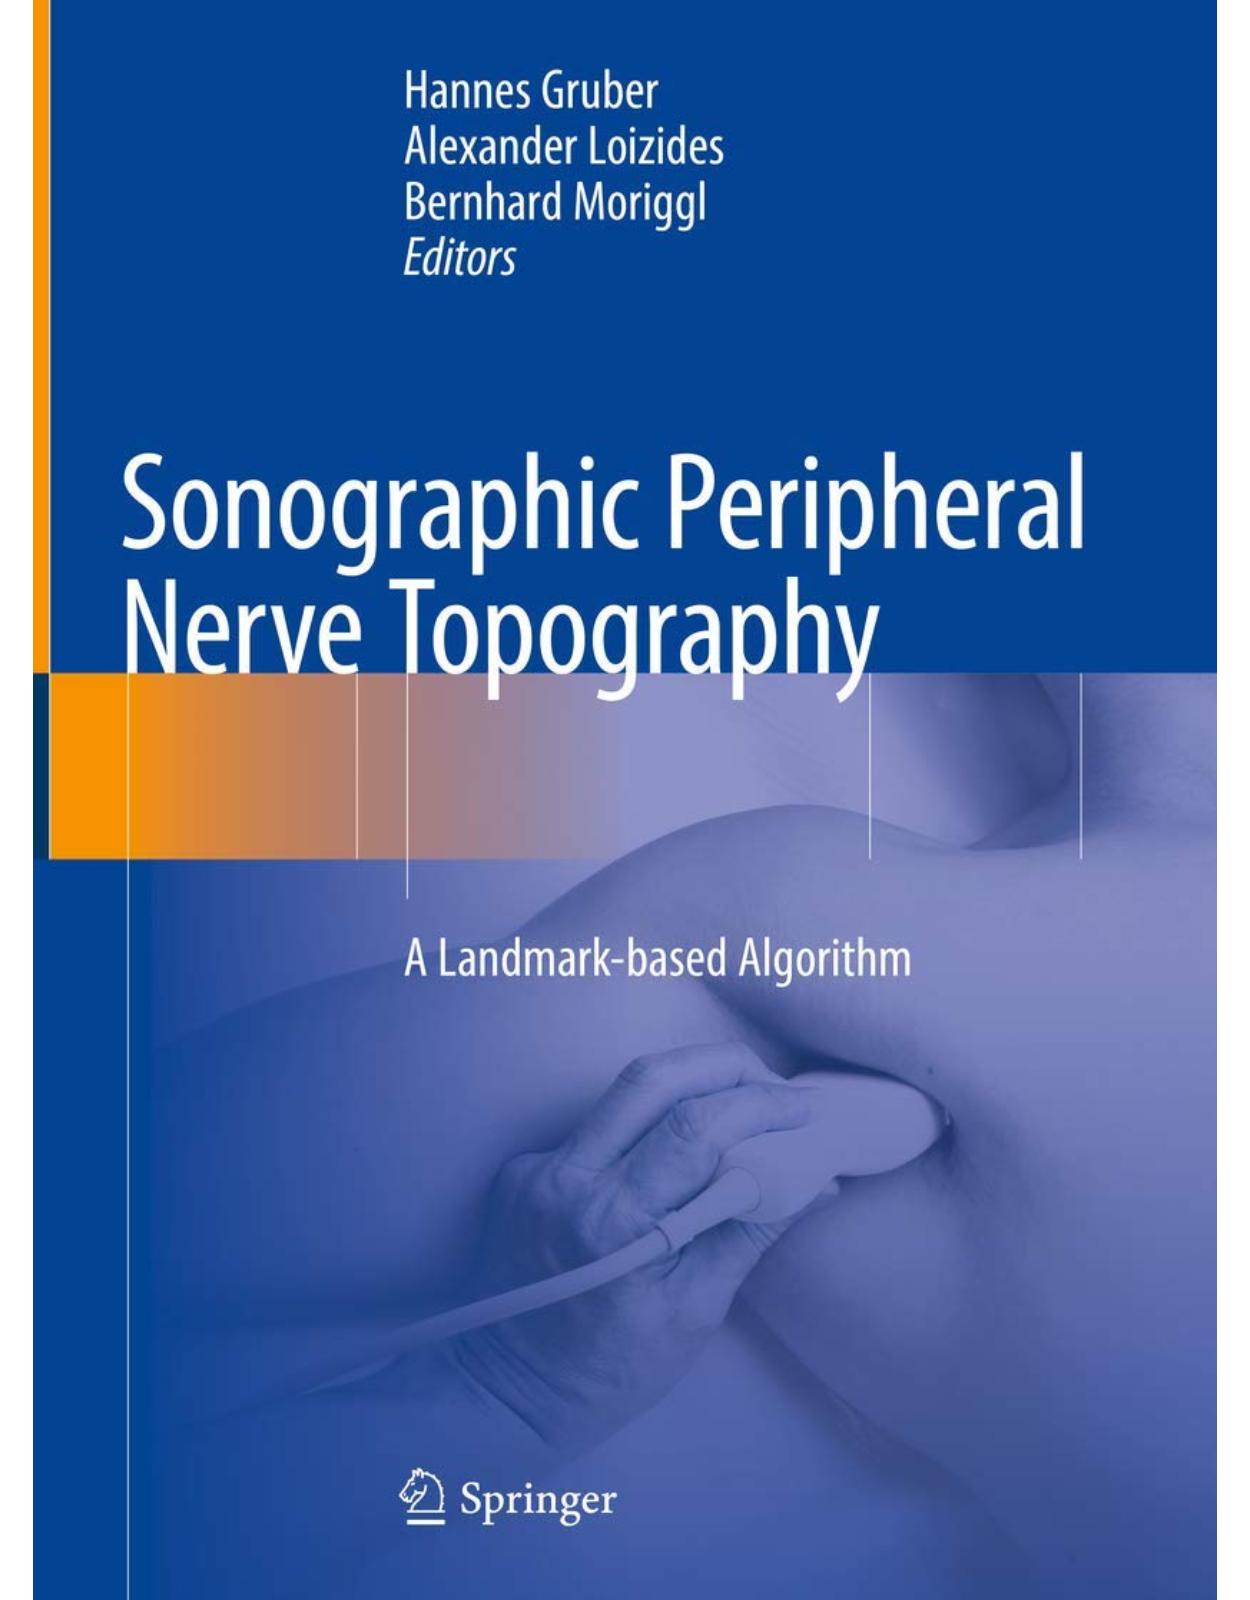 Sonographic Peripheral Nerve Topography: A Landmark-based Algorithm